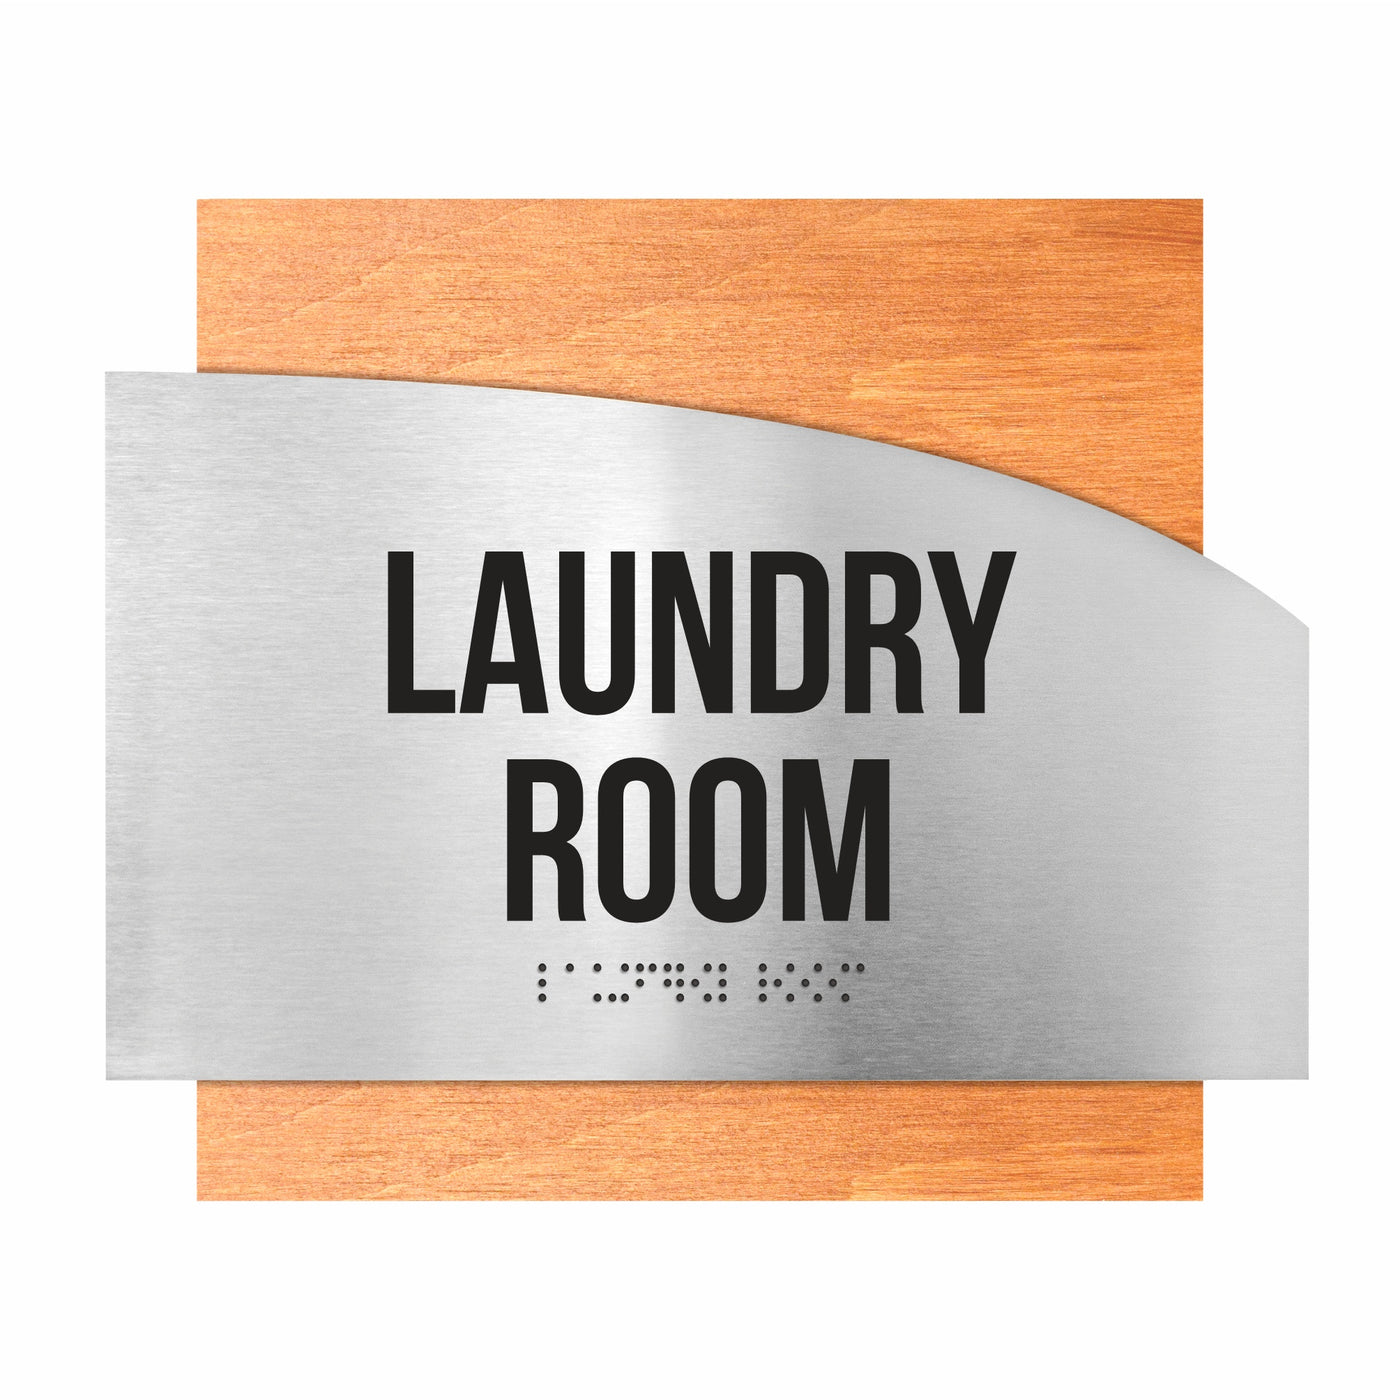 Laundry Room Custom Door Signs - Stainless Steel & Wood - "Wave" Design